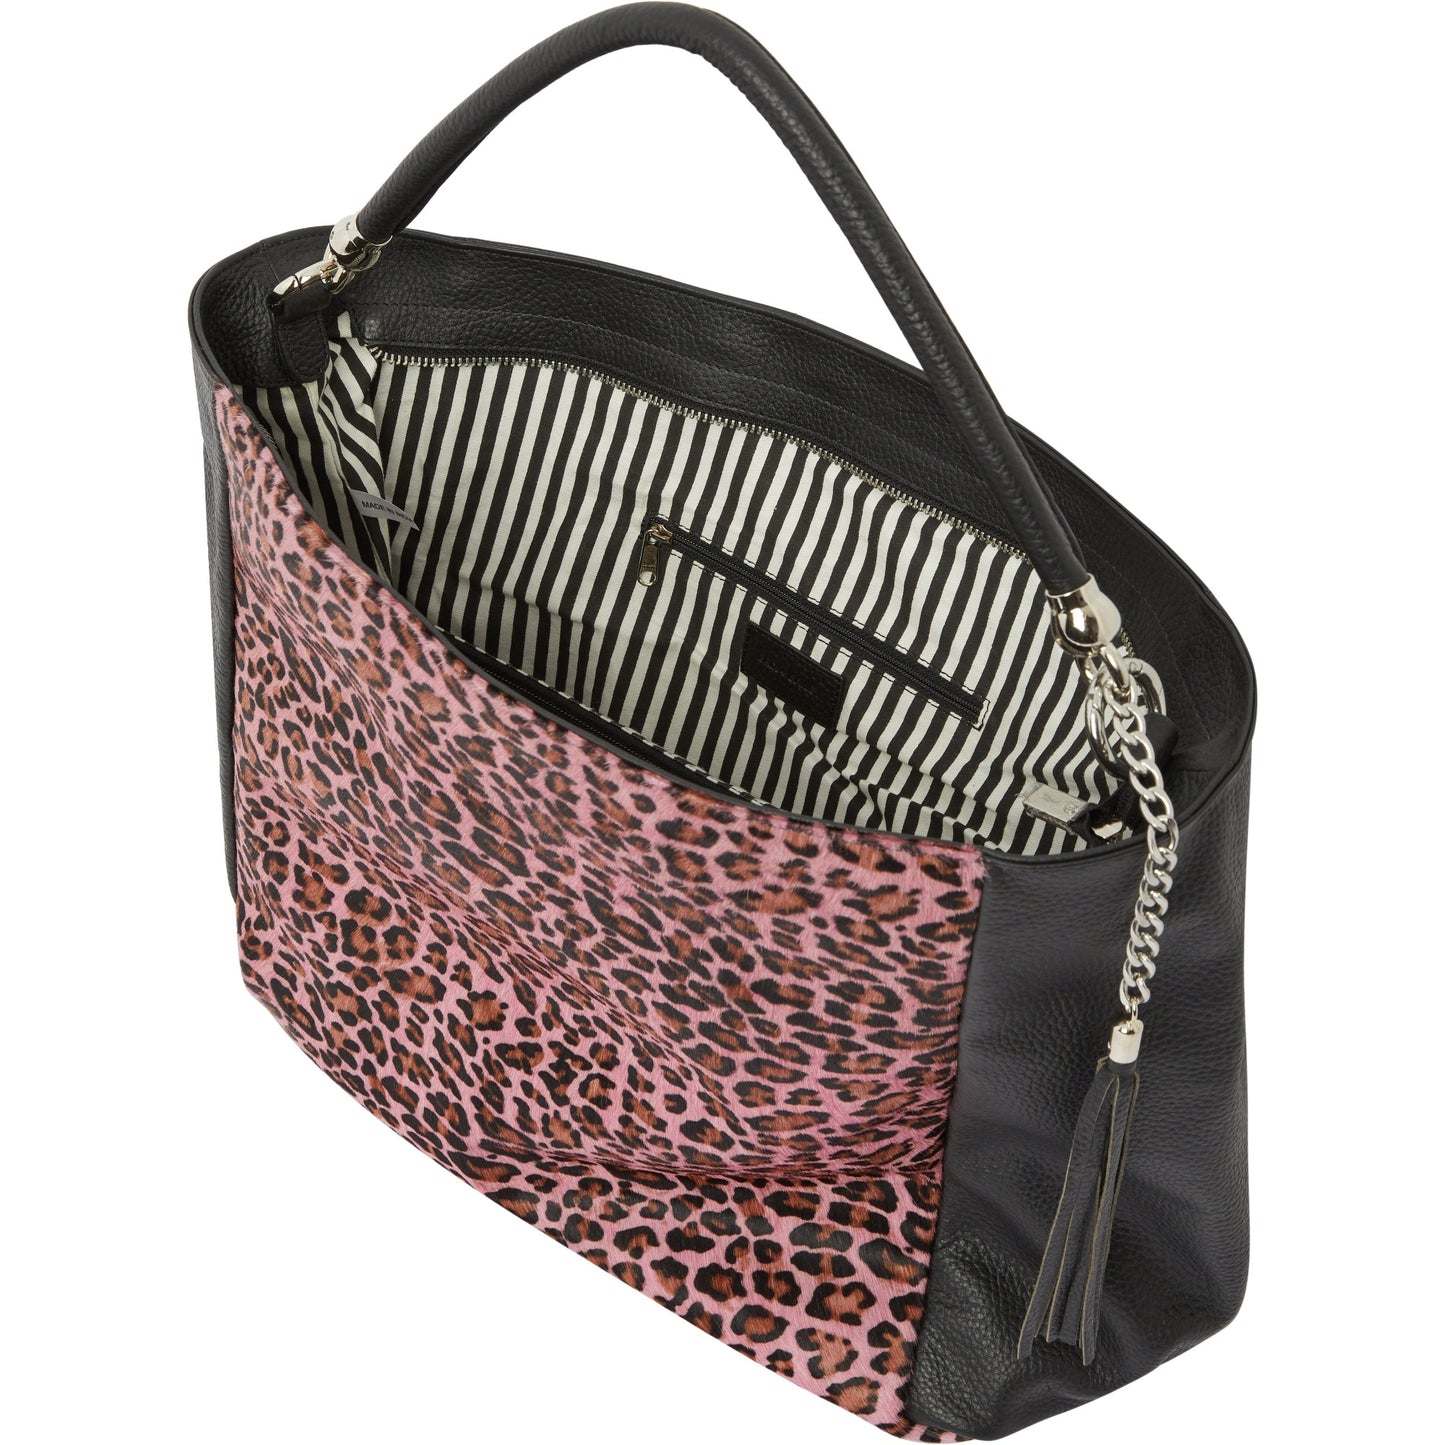 Pink Animal Print Leather Shoulder Bag Brix and Bailey Ethical Bag Brand